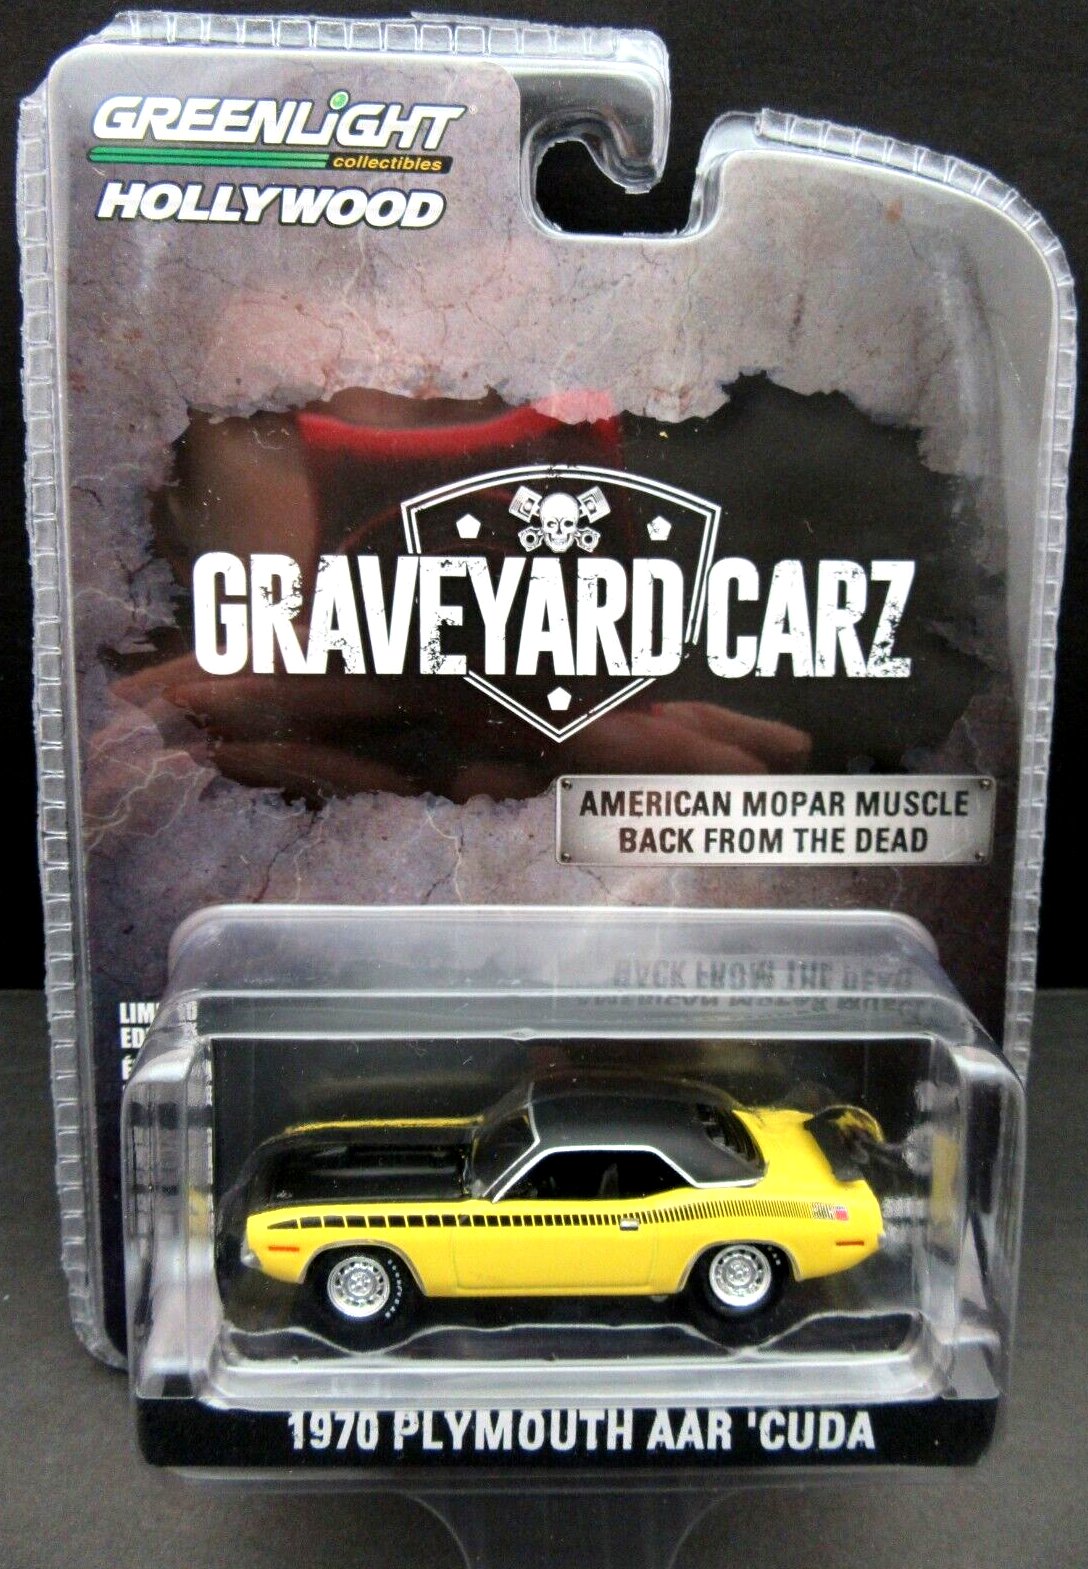 Greenlight Collectable Hollywood Graveyard Carz 1970 Plymouth AAR 'Cuda Die Cast